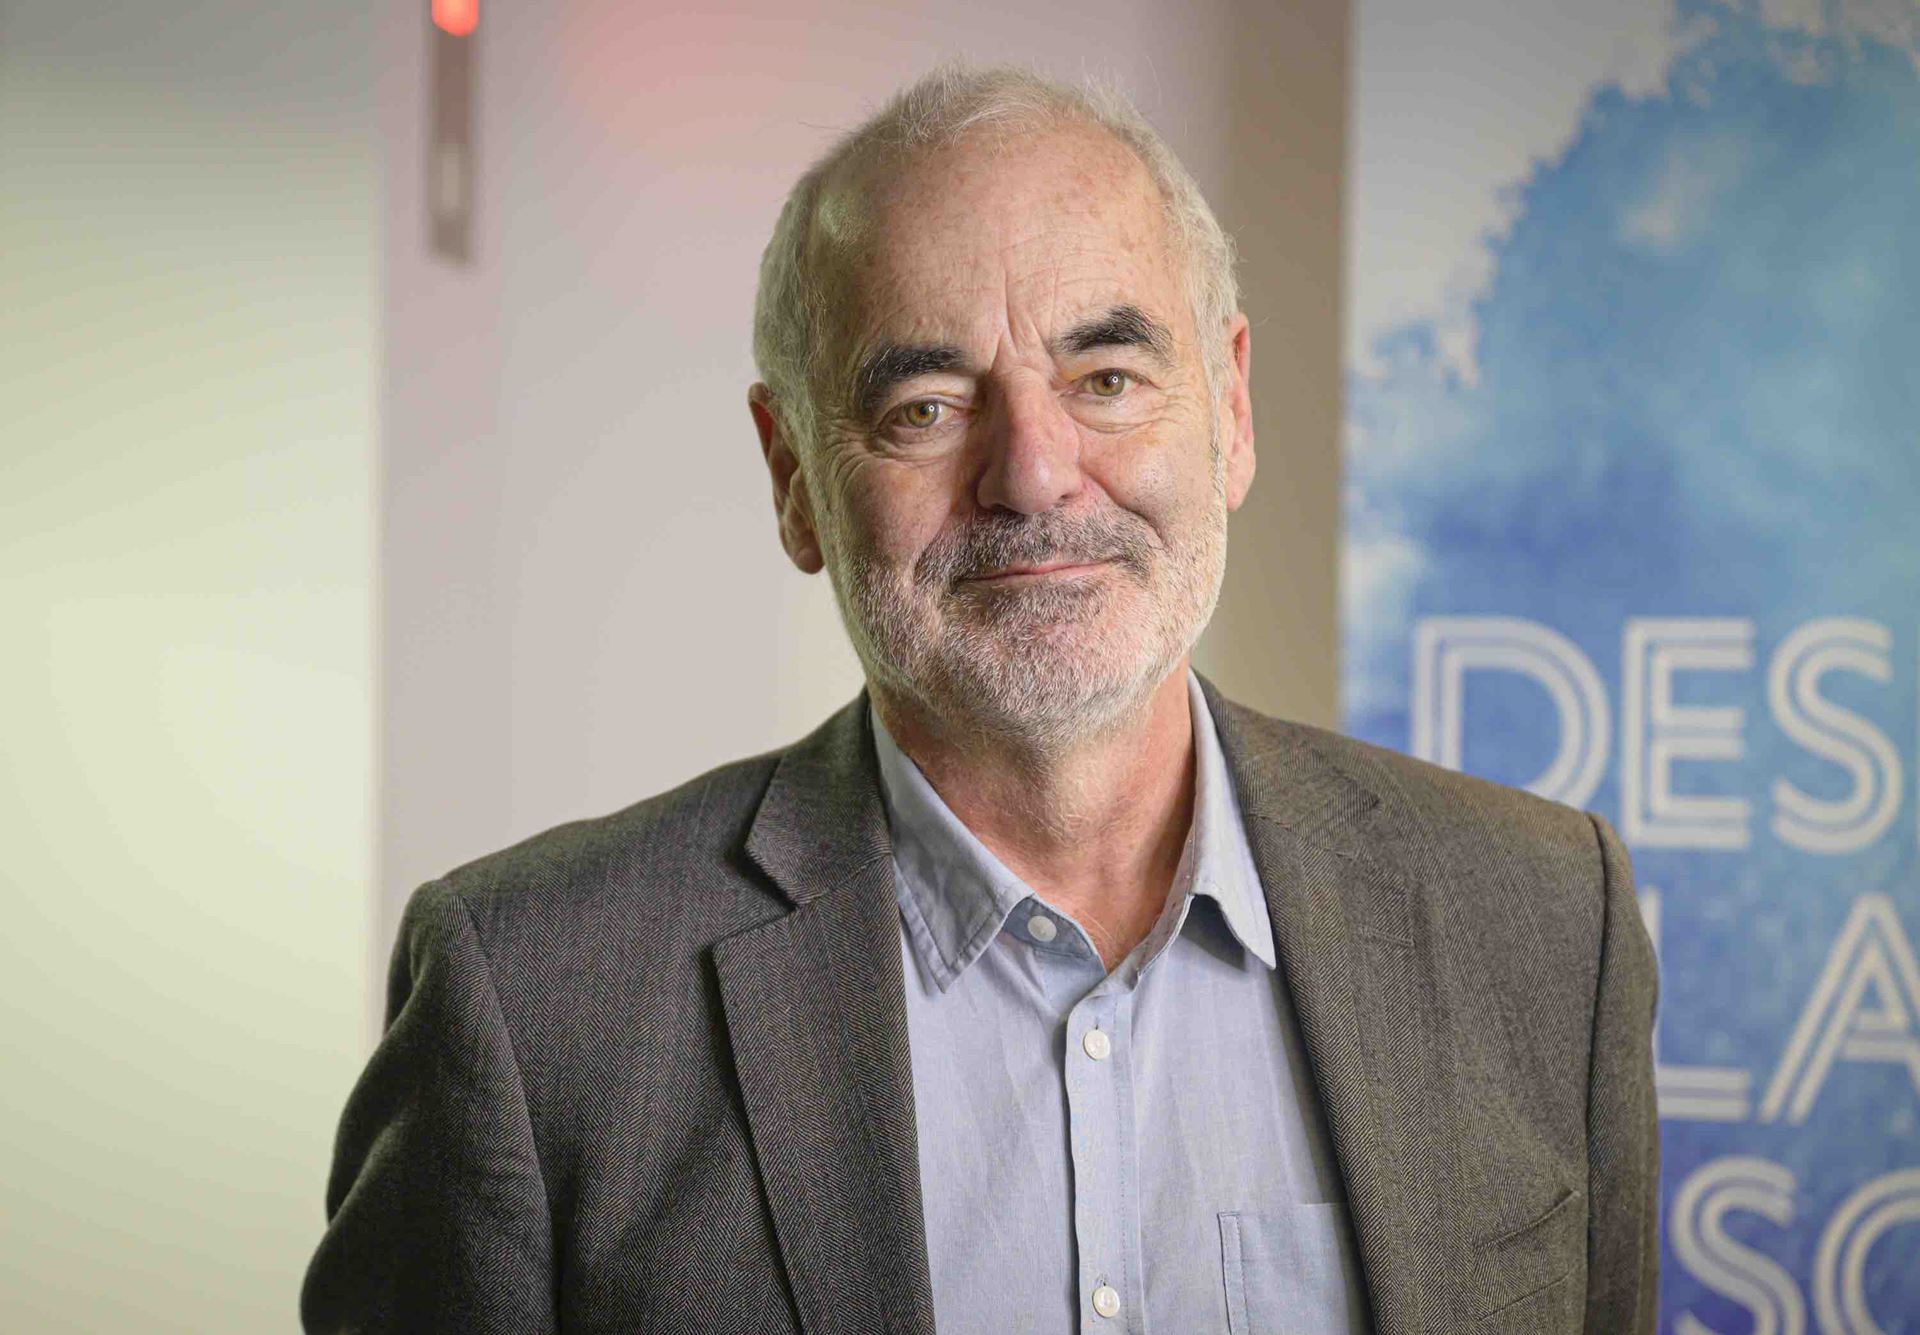 Professor Sir David Spiegelhalter FRS OBE